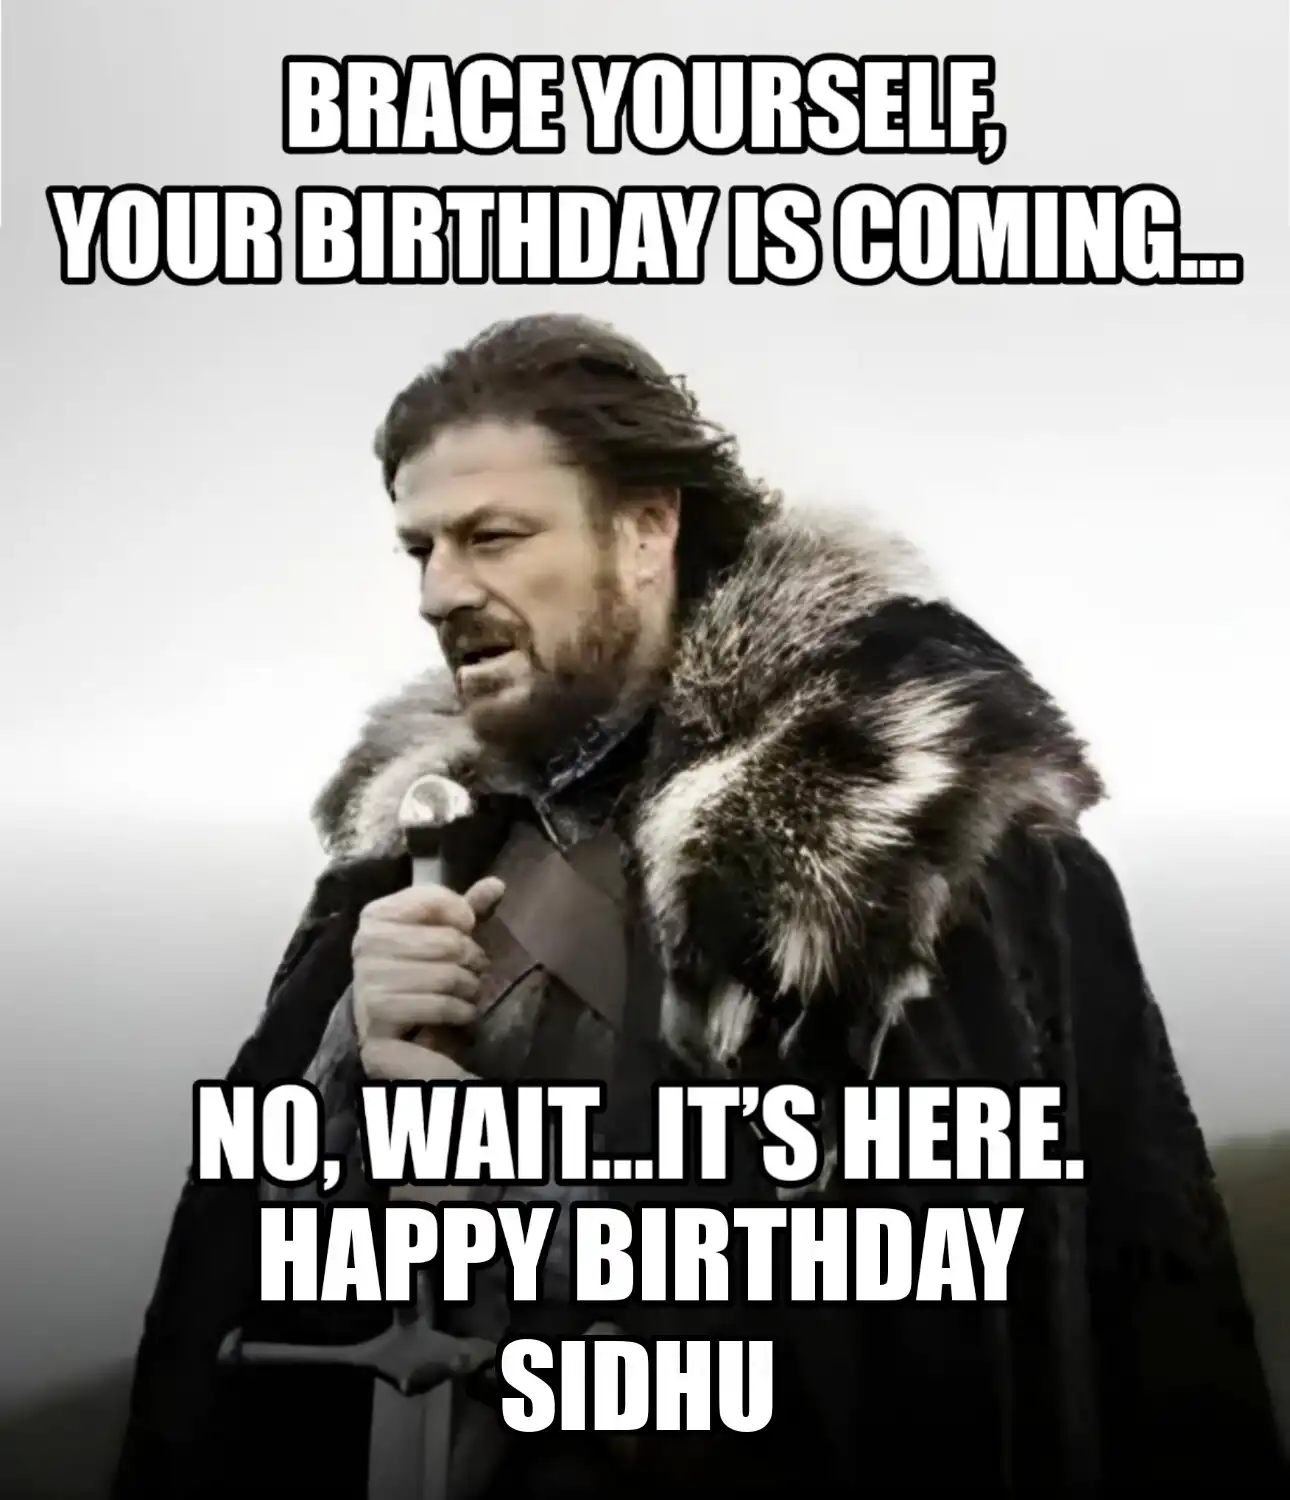 Happy Birthday Sidhu Brace Yourself Your Birthday Is Coming Meme